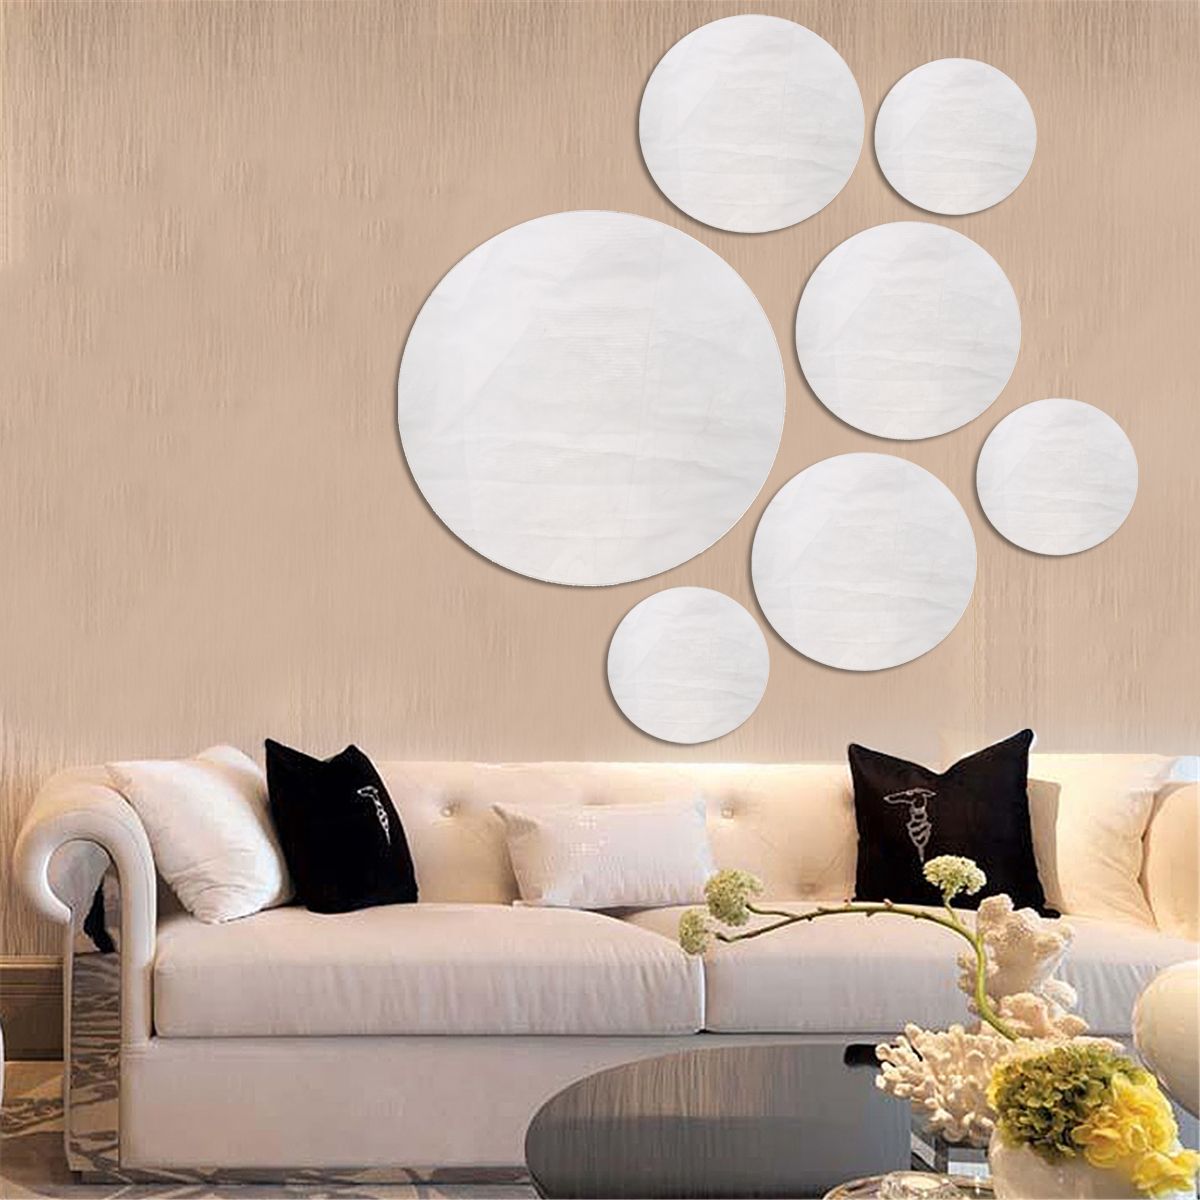 7Pcs-Round-3D-Mirror-Decal-Art-Mural-Wall-Sticker-Home-Bathroom-DIY-Decor-Removable-1229968